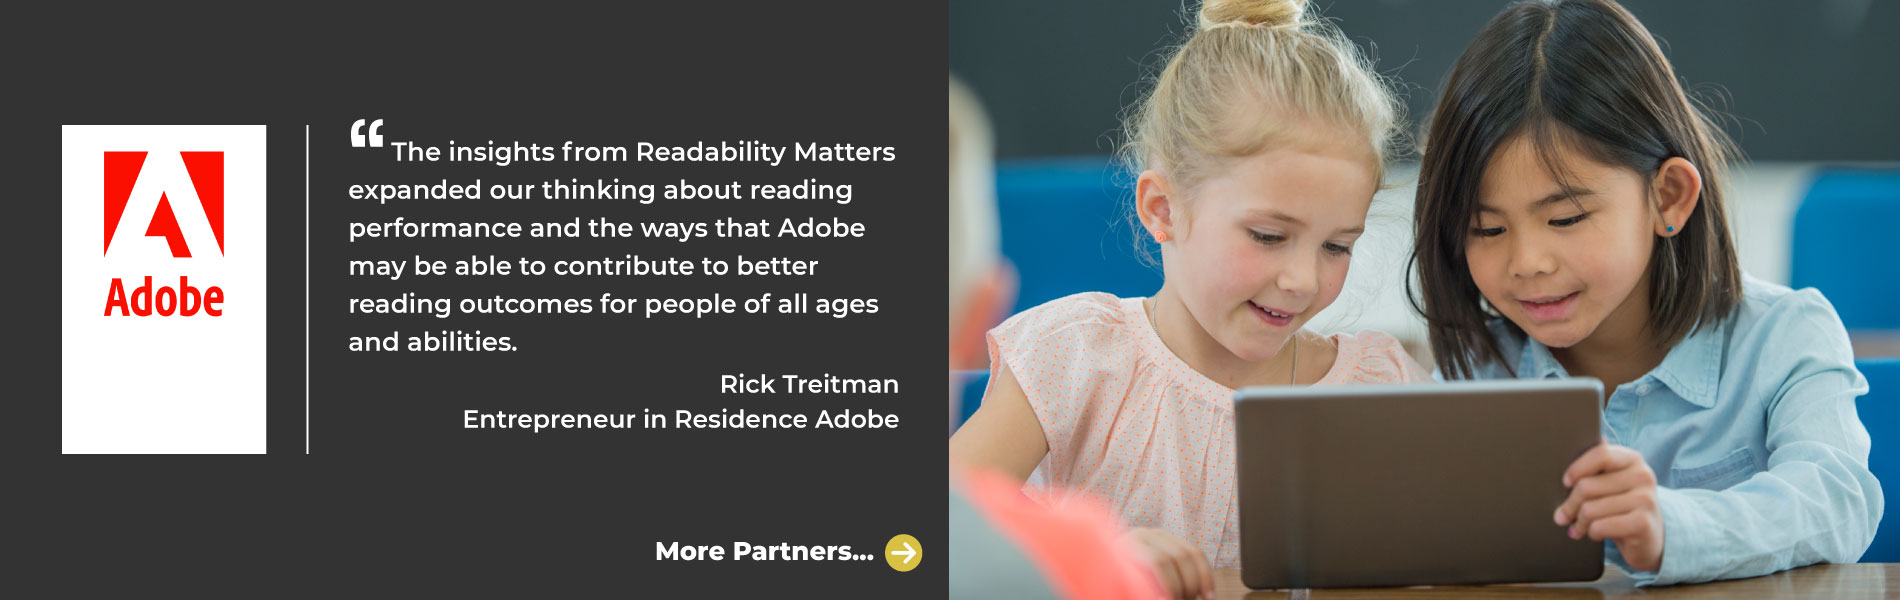 Adobe Treitman - Insights from Readability Matters